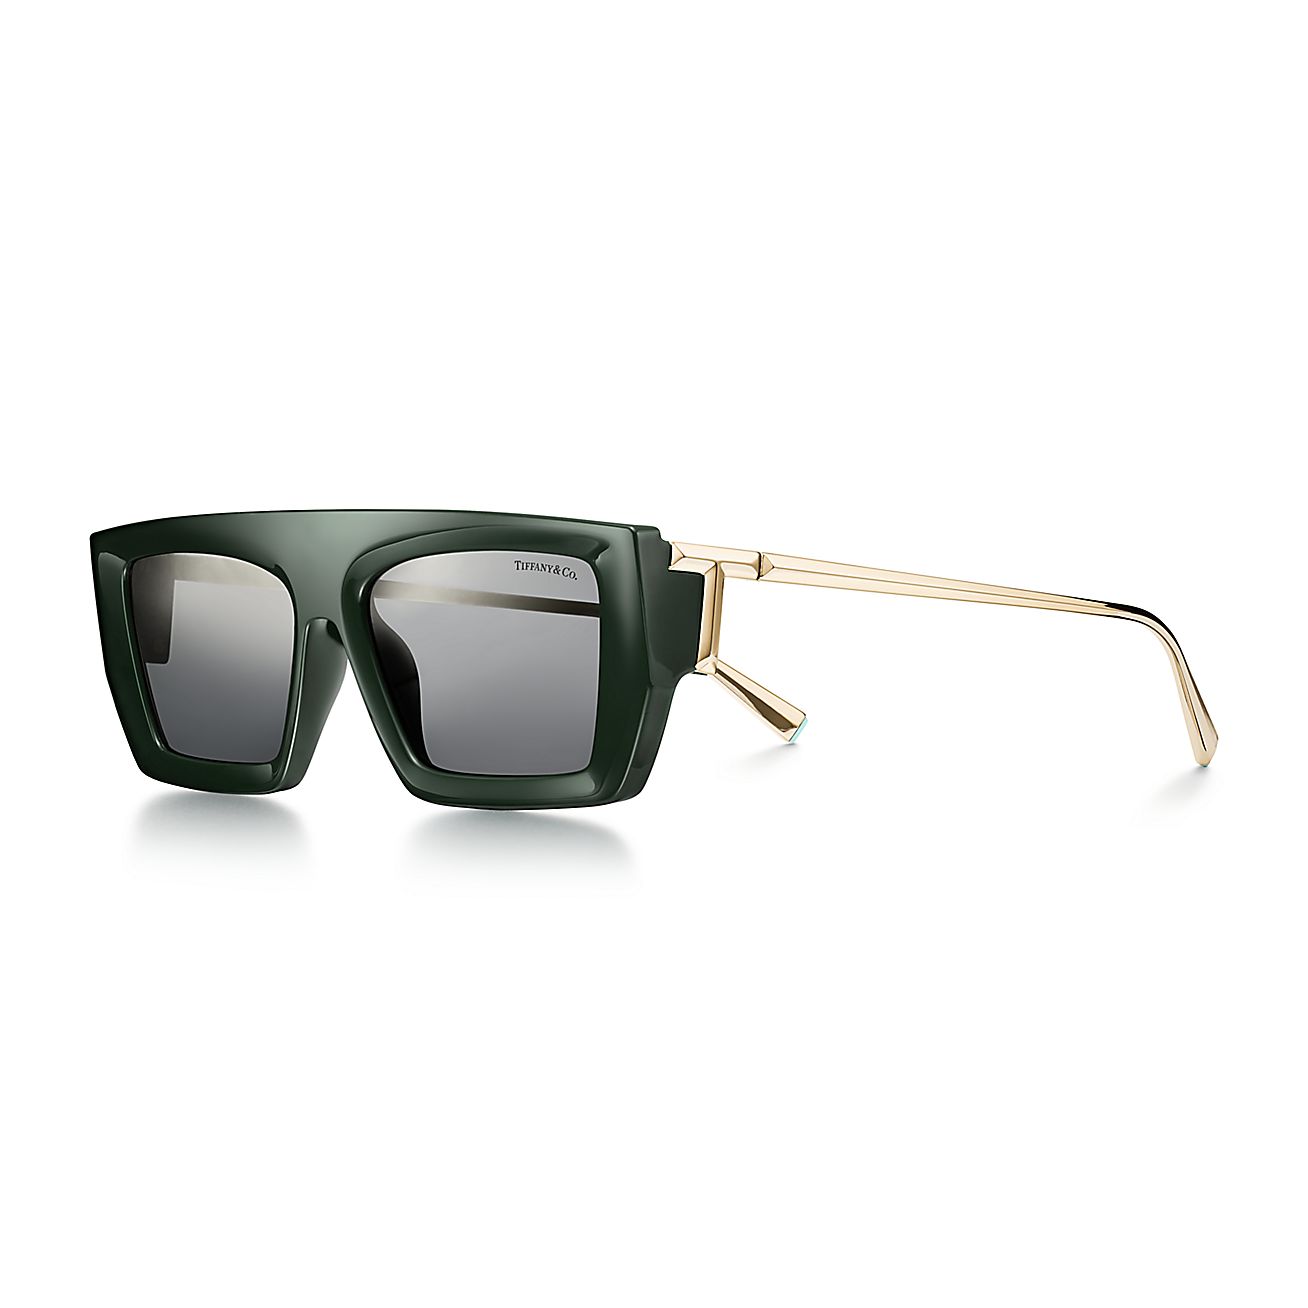 Tiffany T Sunglasses in Dark Green Acetate with Dark Gray Lenses